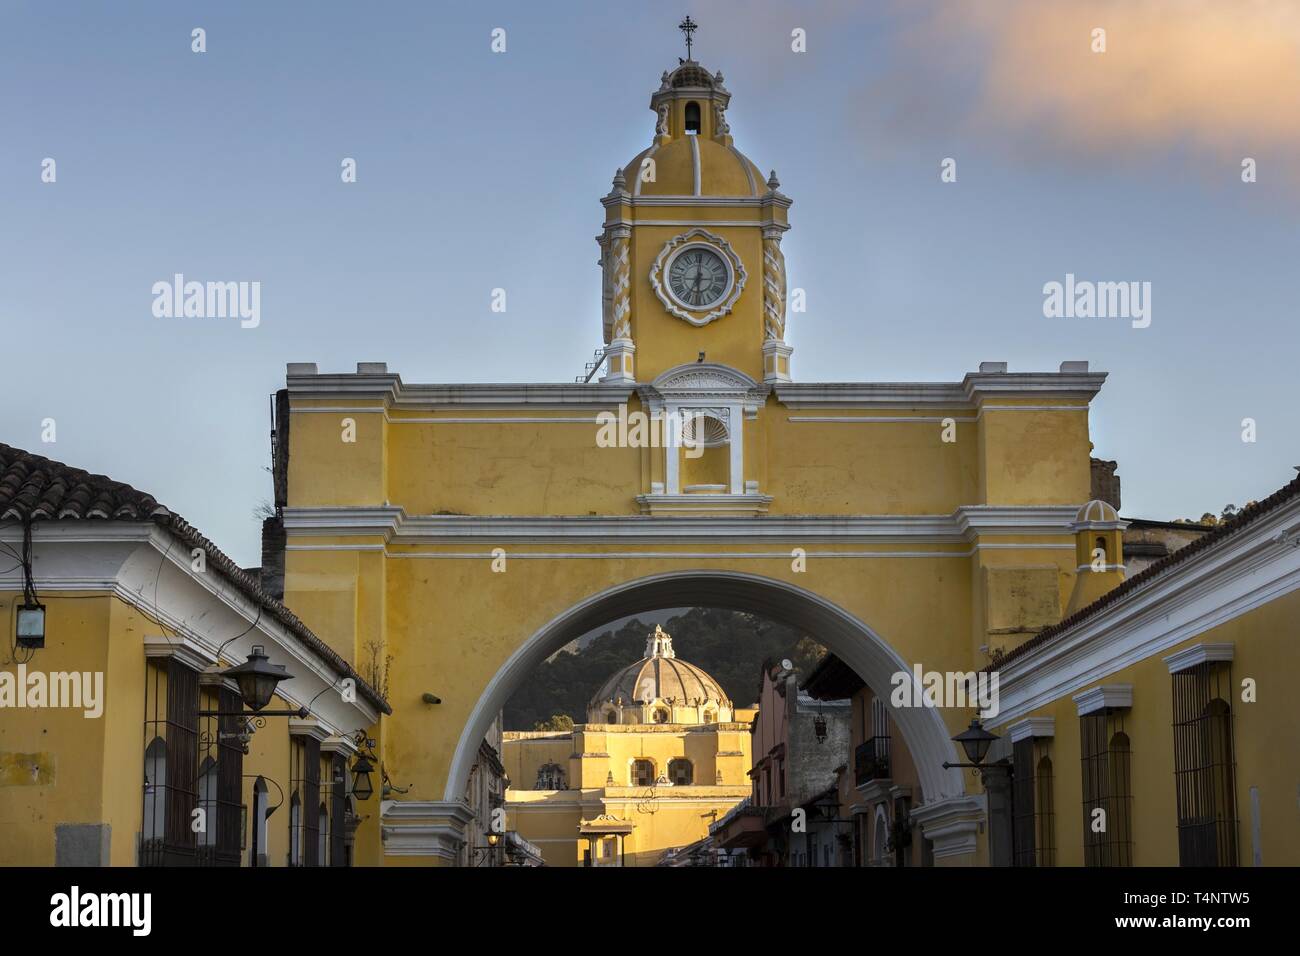 Spanish Colonial Architecture in Old City Antigua Guatemala with Santa Catalina Arch and Catholic Church Iglesia de la Merced in the Background Stock Photo